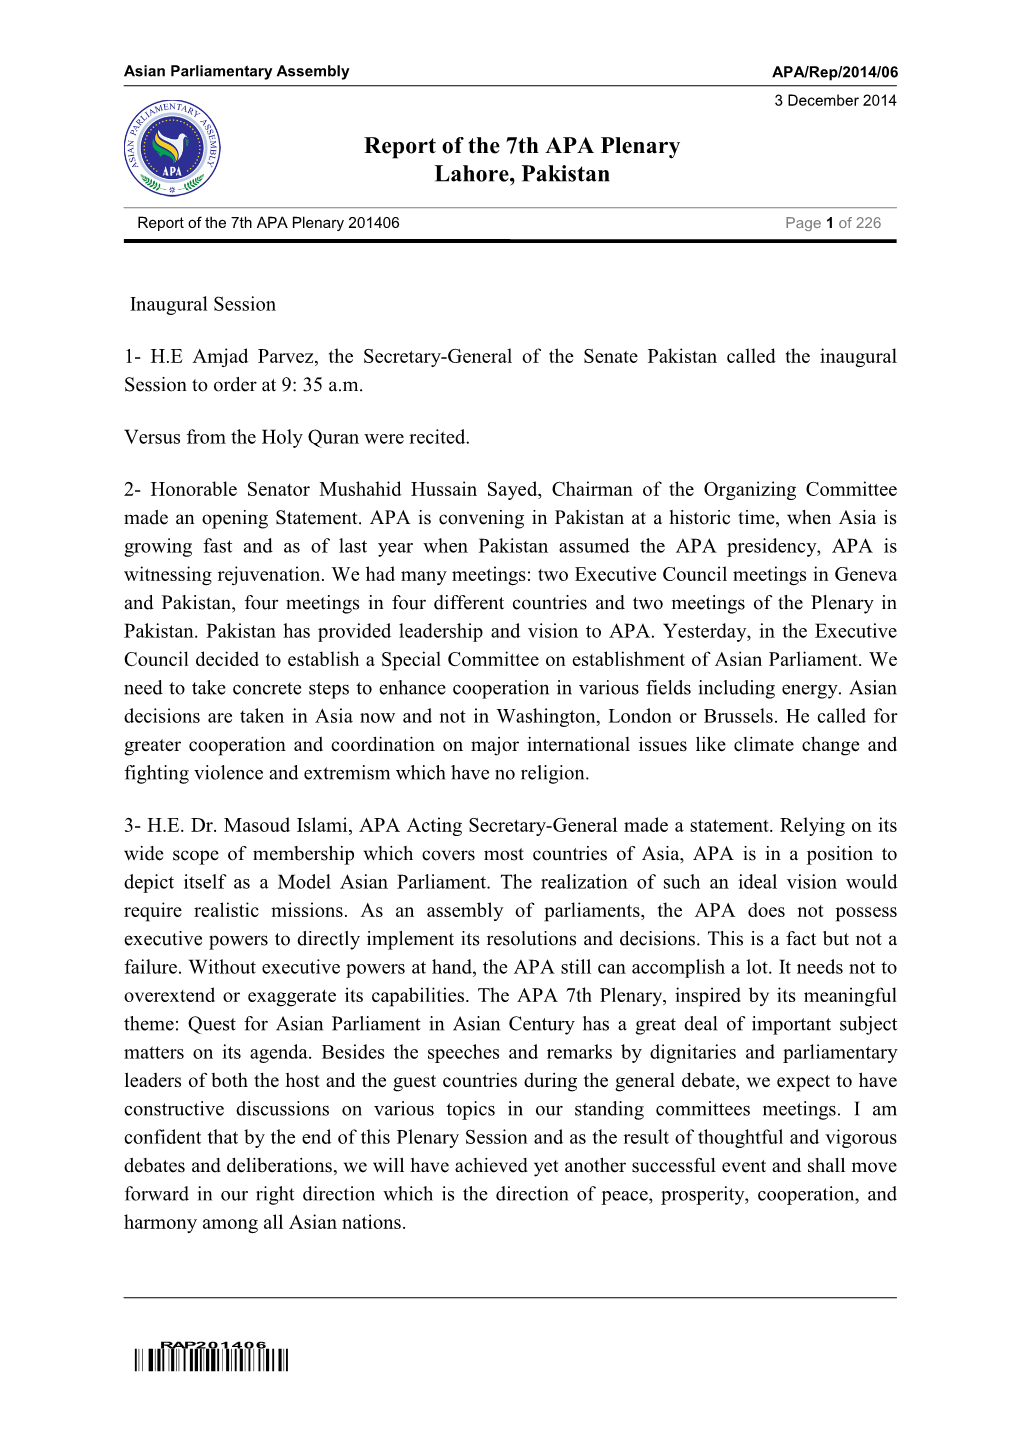 Report of the 7Th APA Plenary Lahore, Pakistan